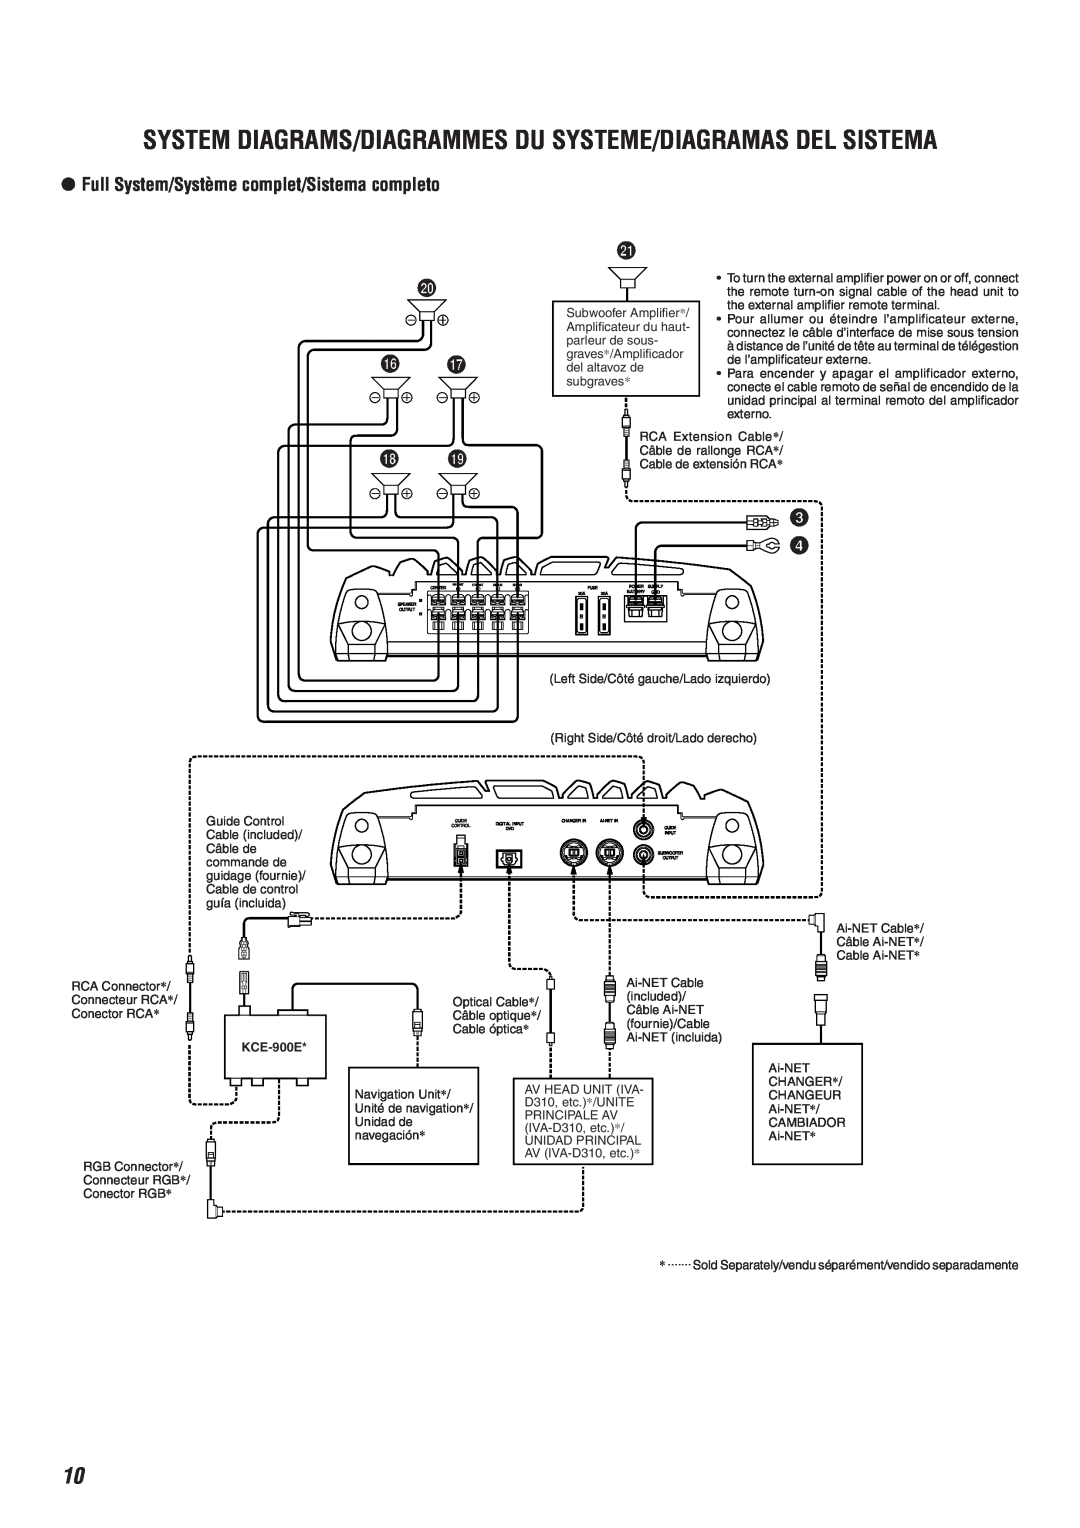 Alpine MRA-F350 owner manual Full System/Système complet/Sistema completo 